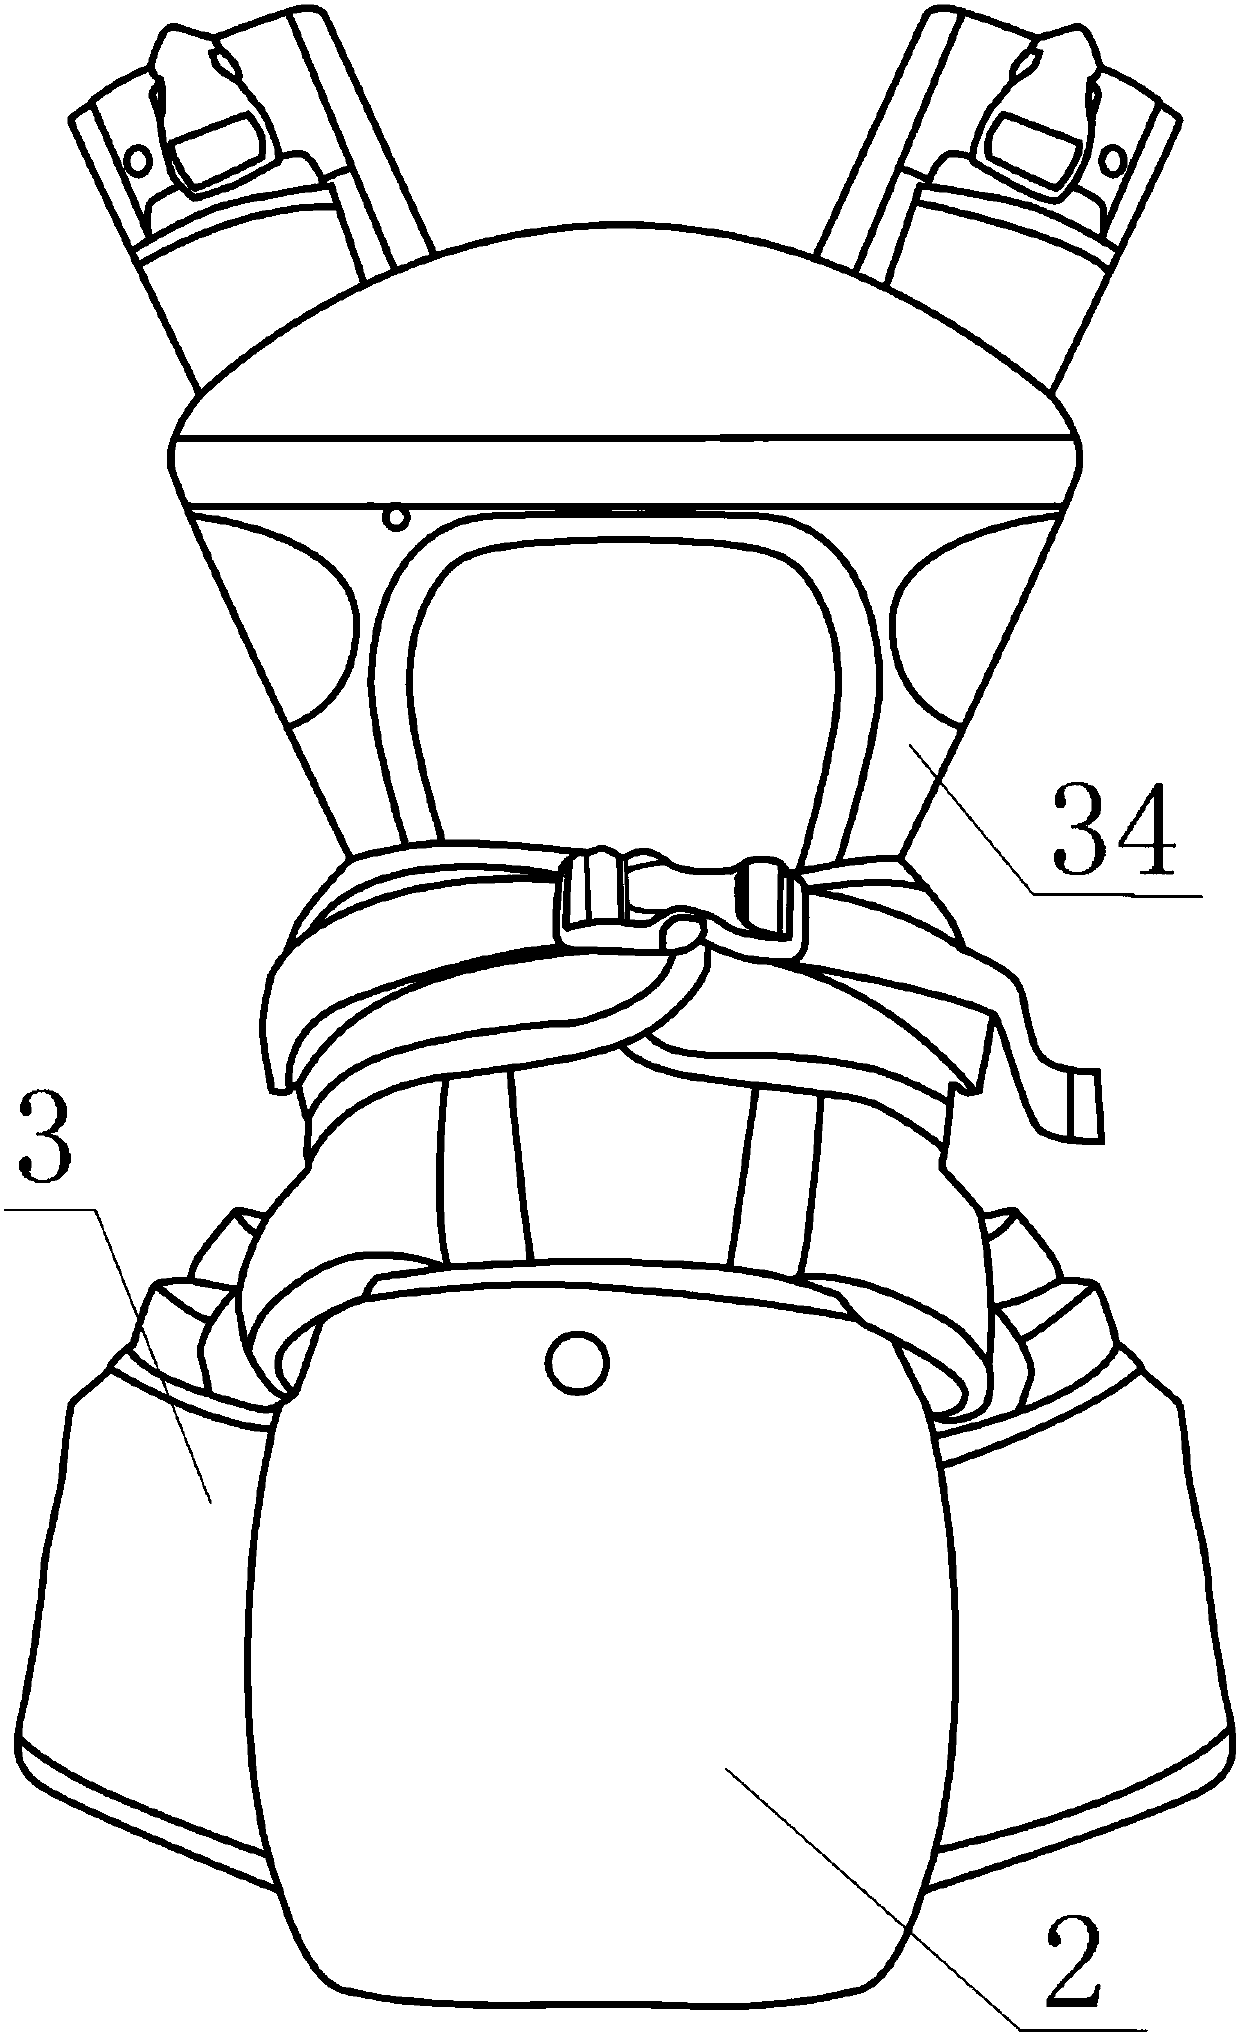 Portable multifunctional baby sling